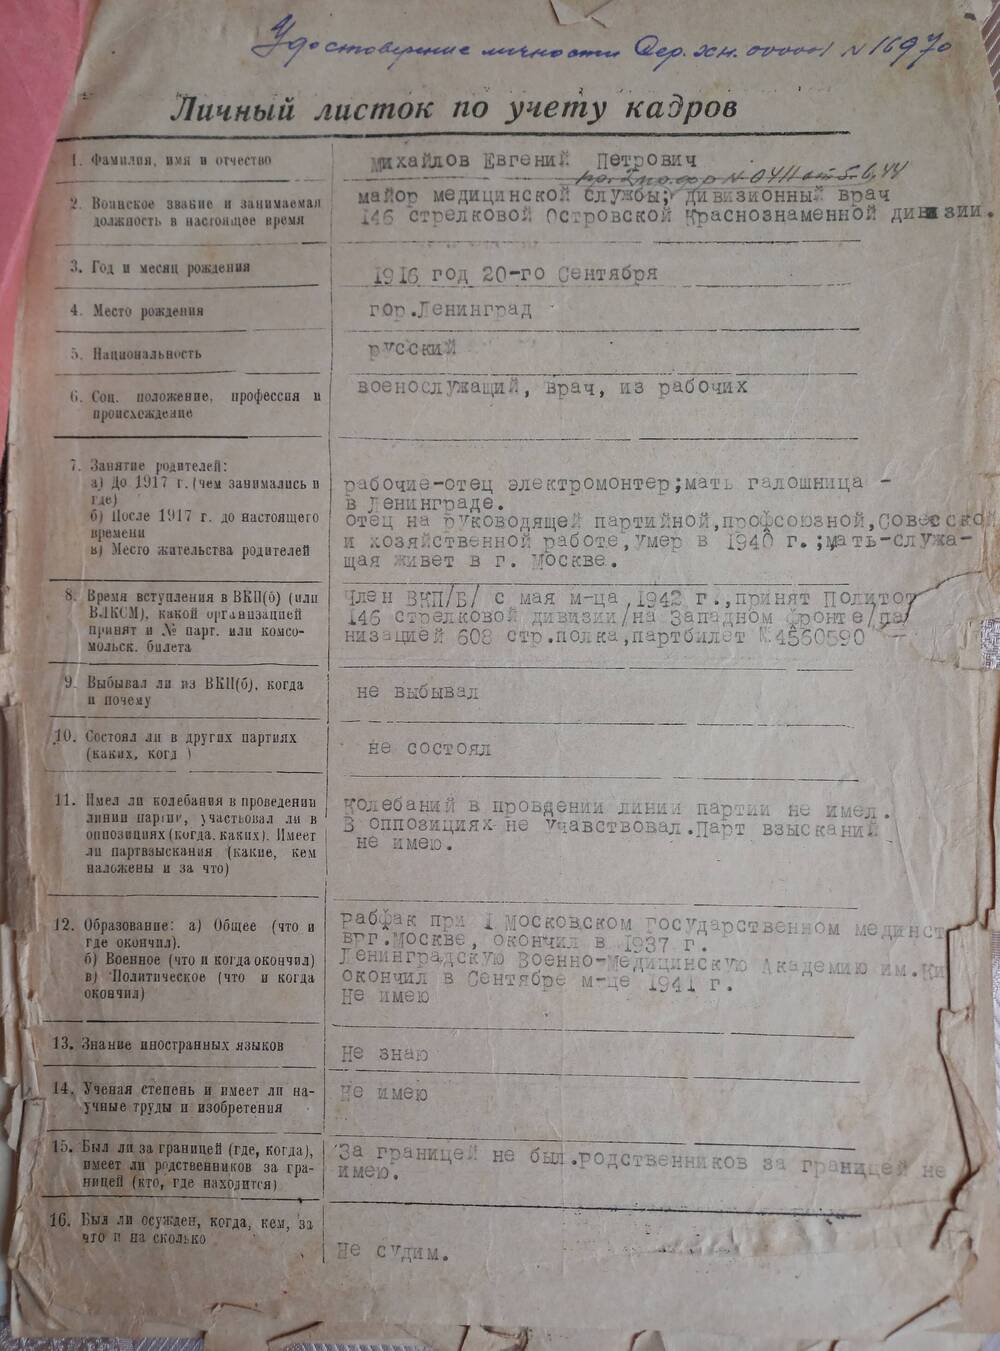 Личный листок по учету кадров Михайлова Е.П., майора медслужбы, дивизионного врача 146 сд